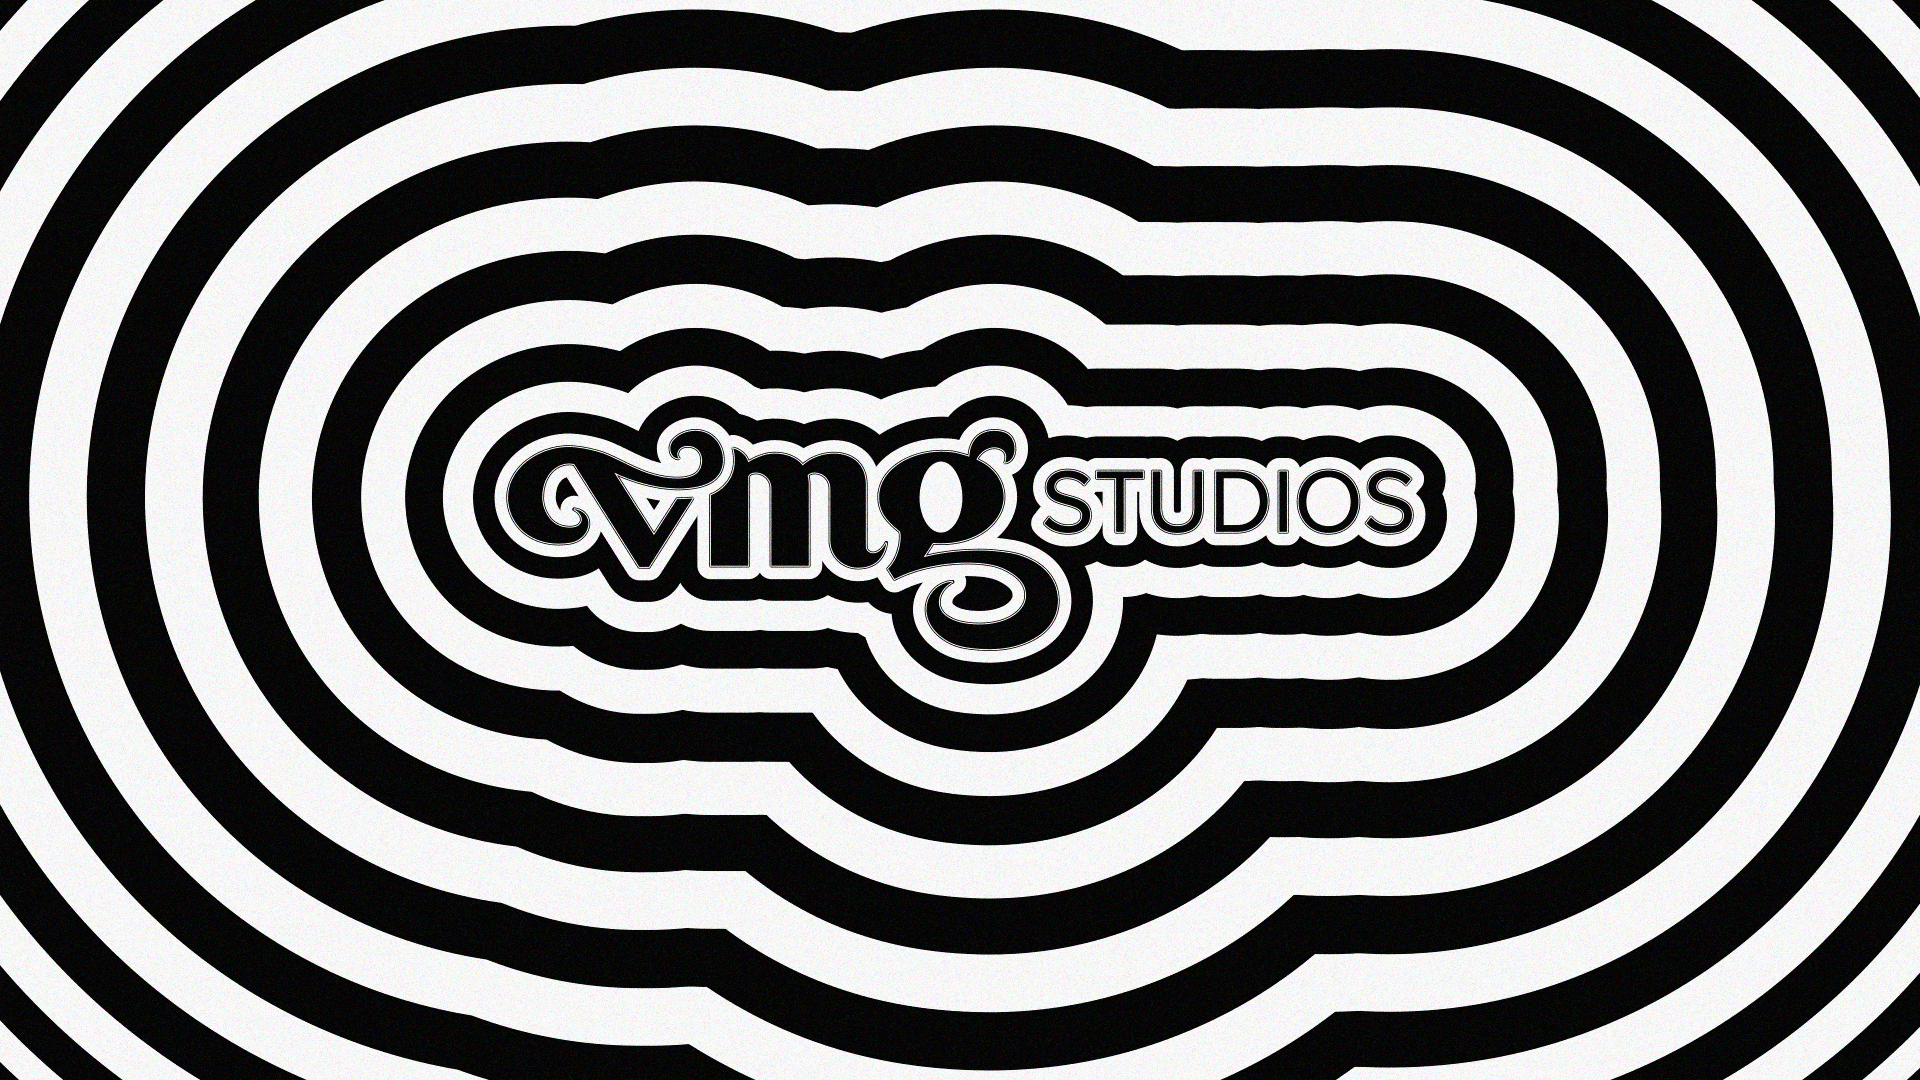 VMG Studios optical illusion design